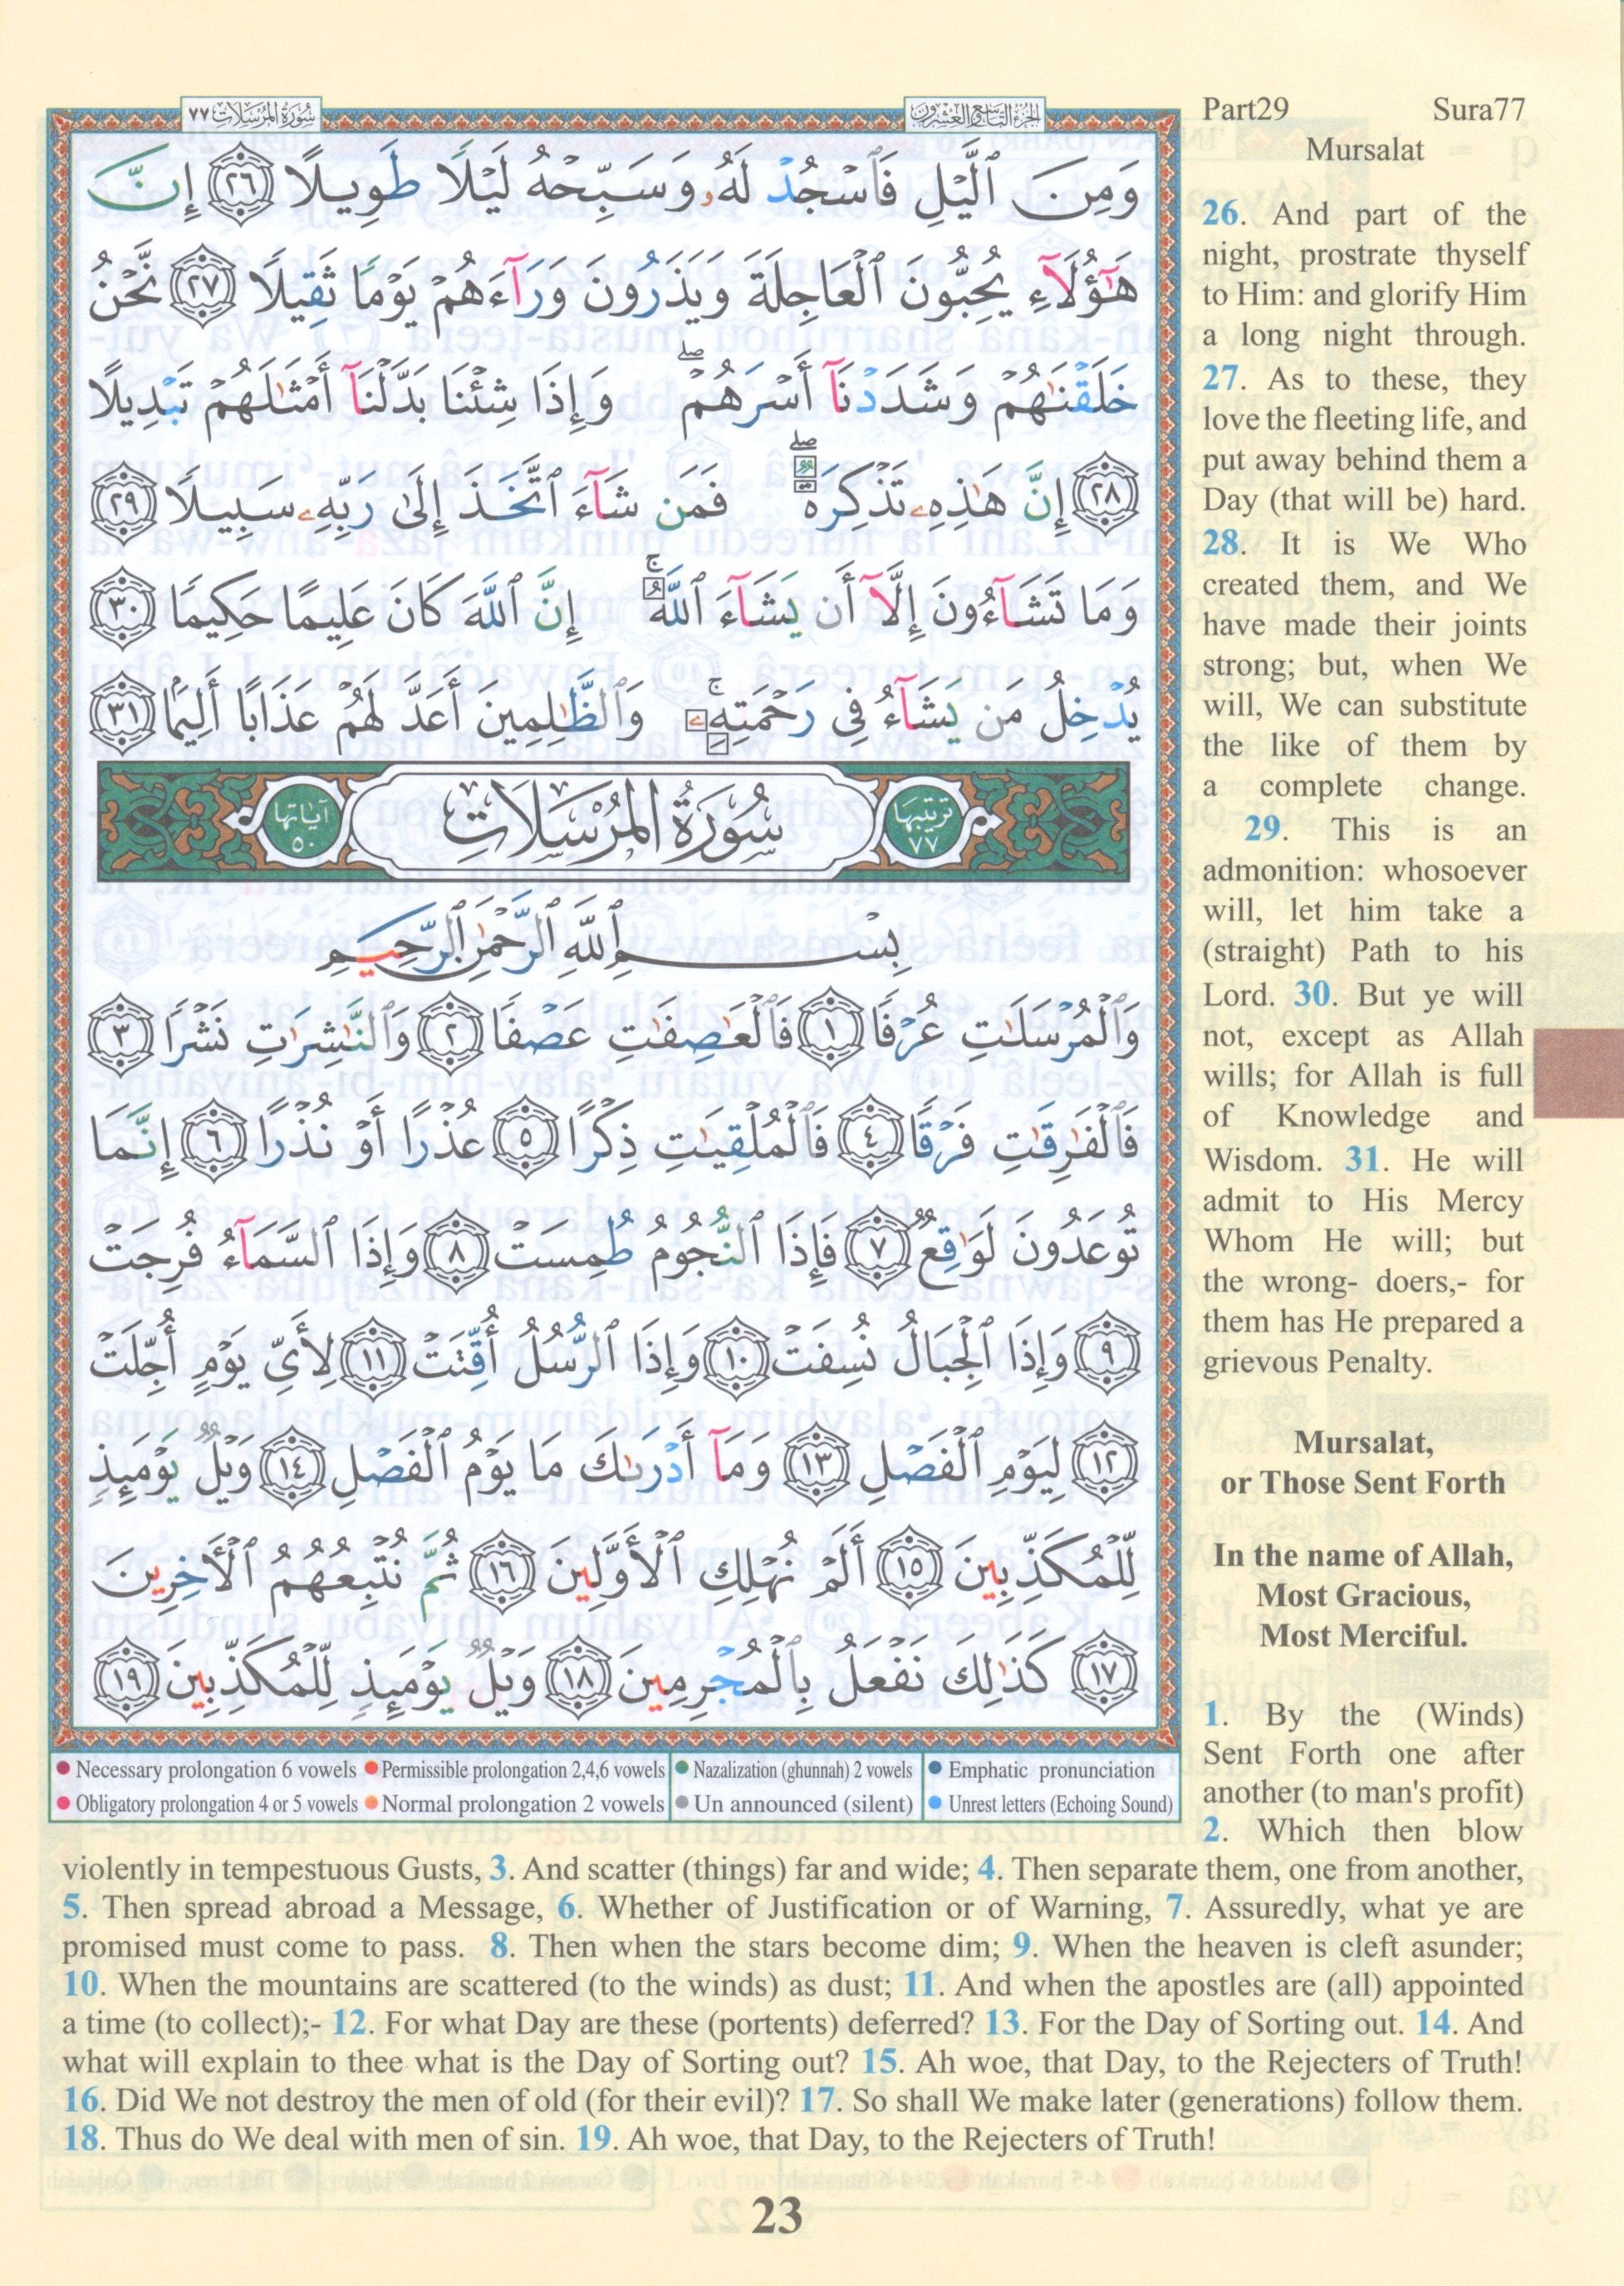 Tajweed Quran Juz' Tabarak Part 29 with Translation and Transliteration 7 x 9